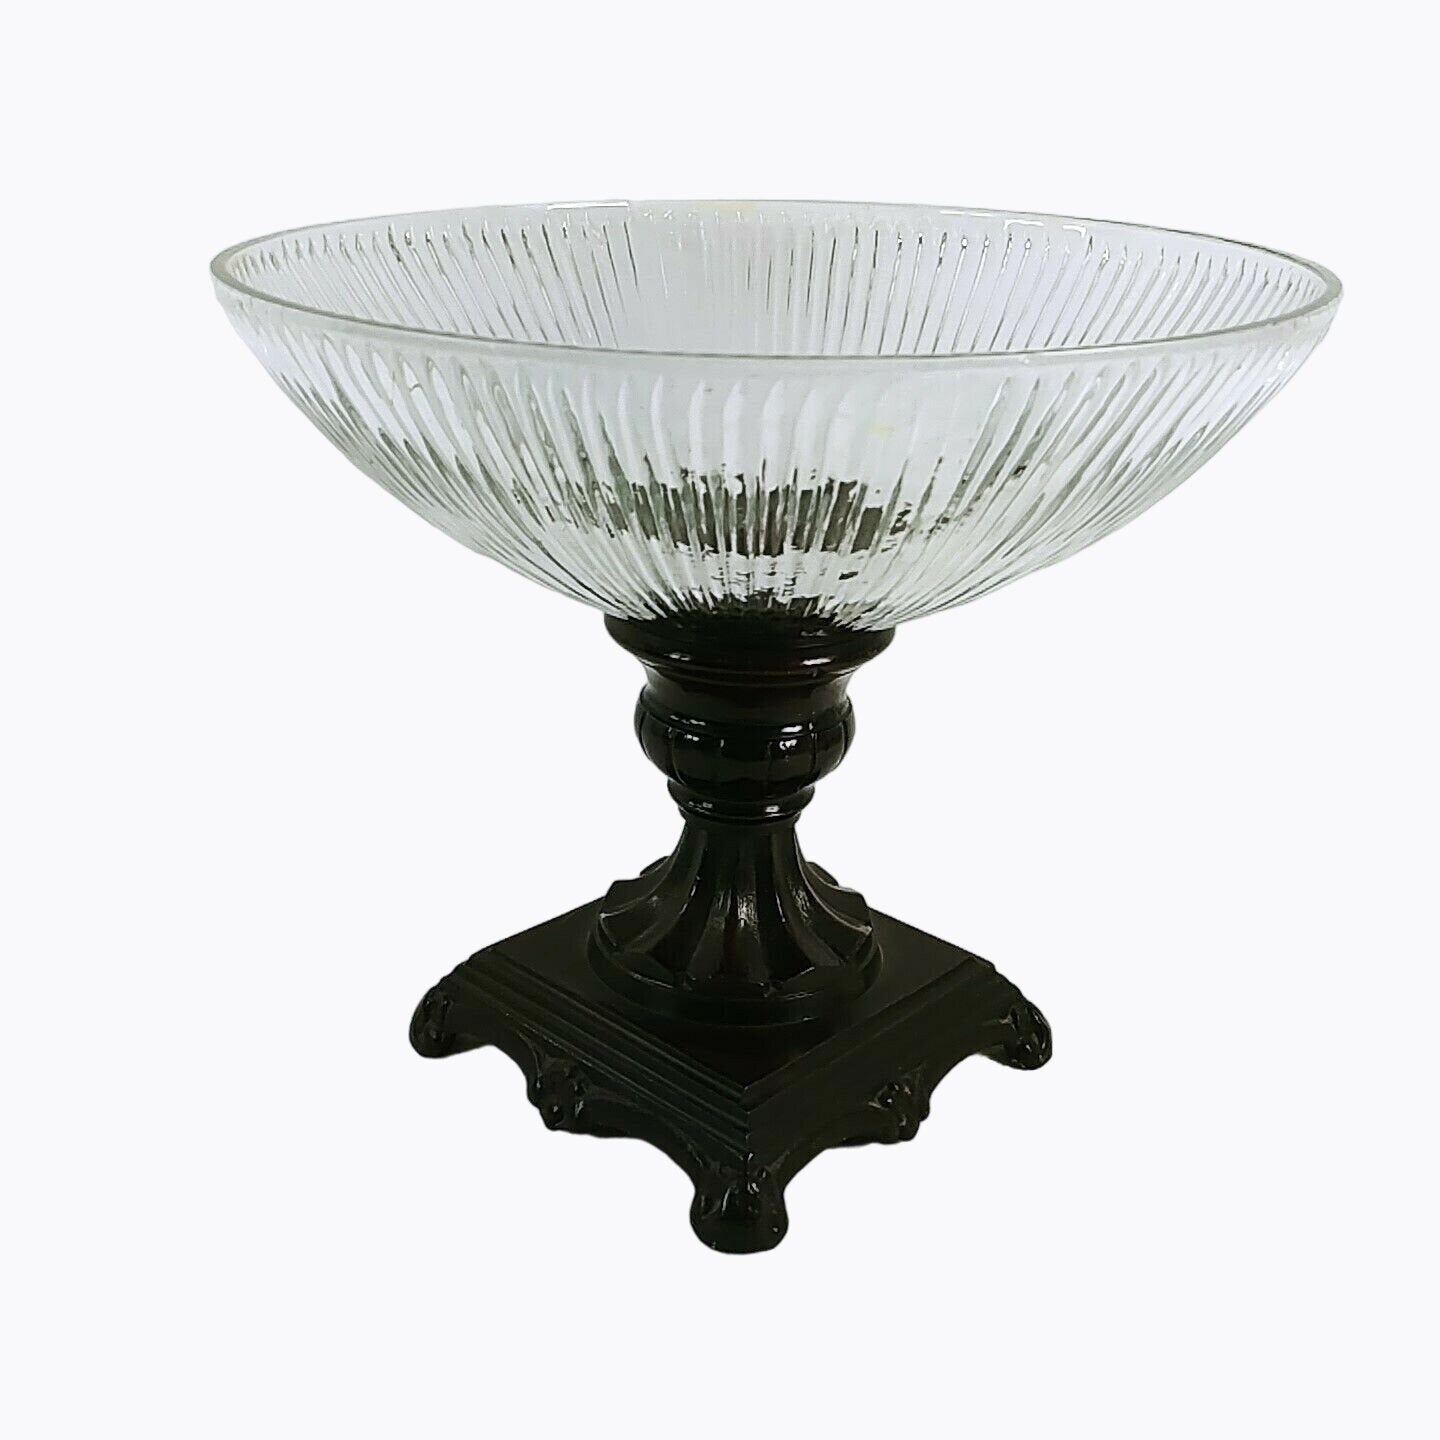 Compote Pedestal Bowl on Ornate Metal Base Table Centerpiece Vintage Decor